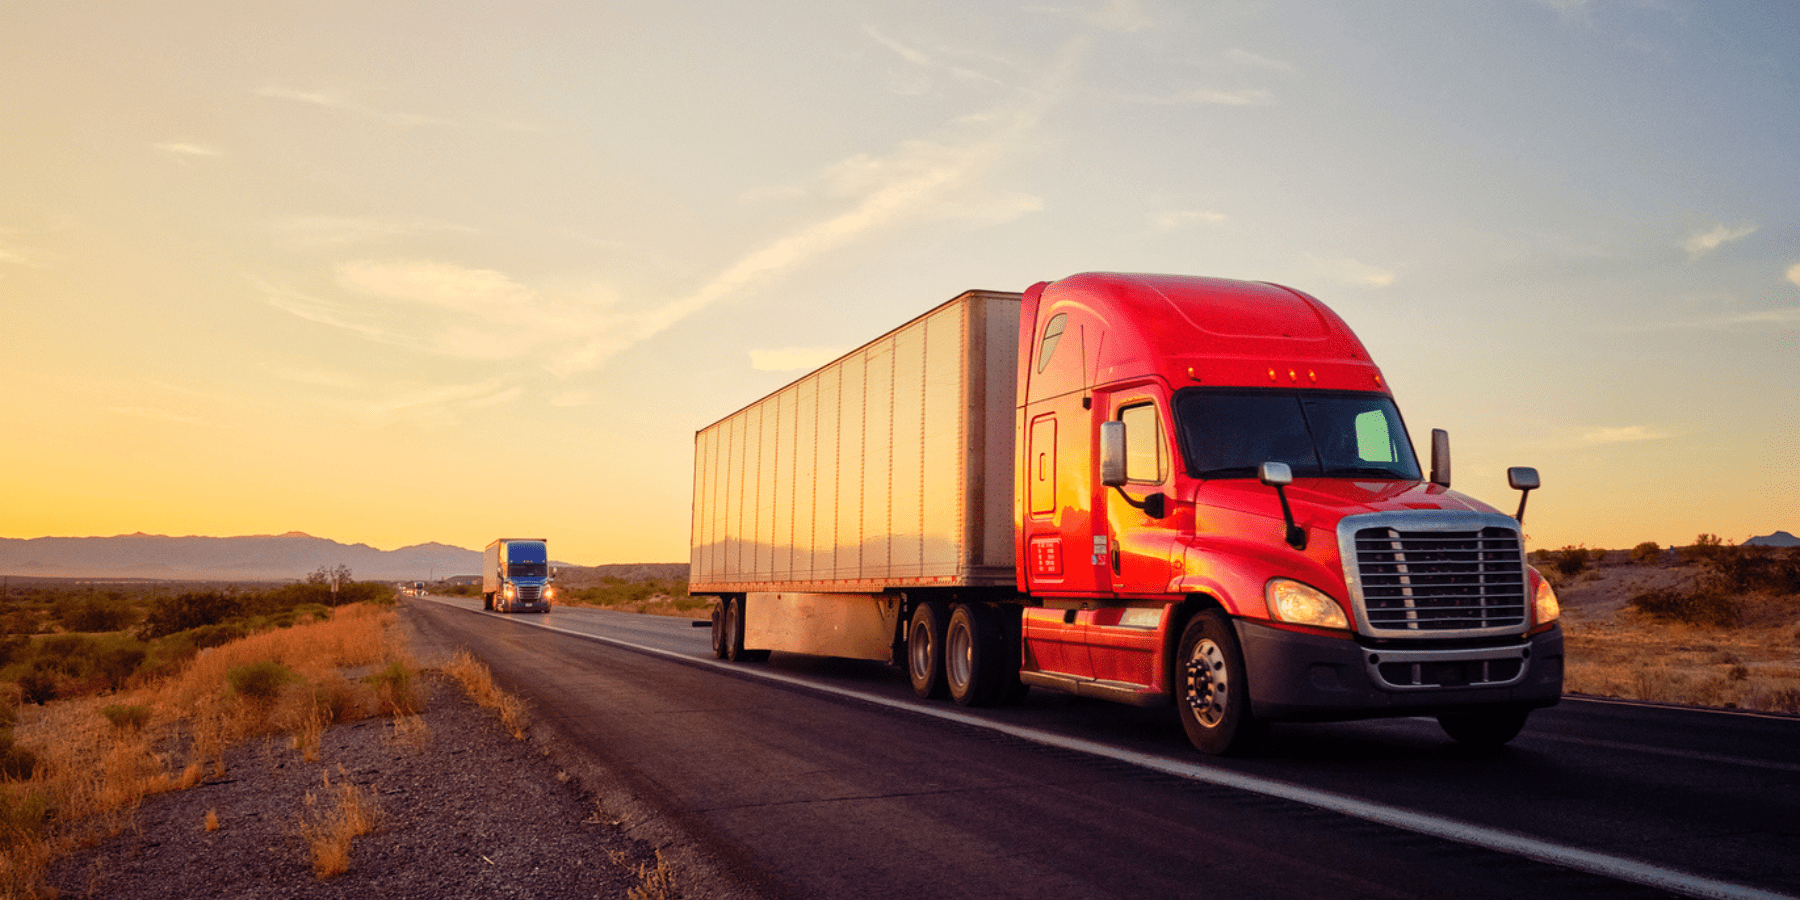 Long haul freight truck driving across the desert at sunset